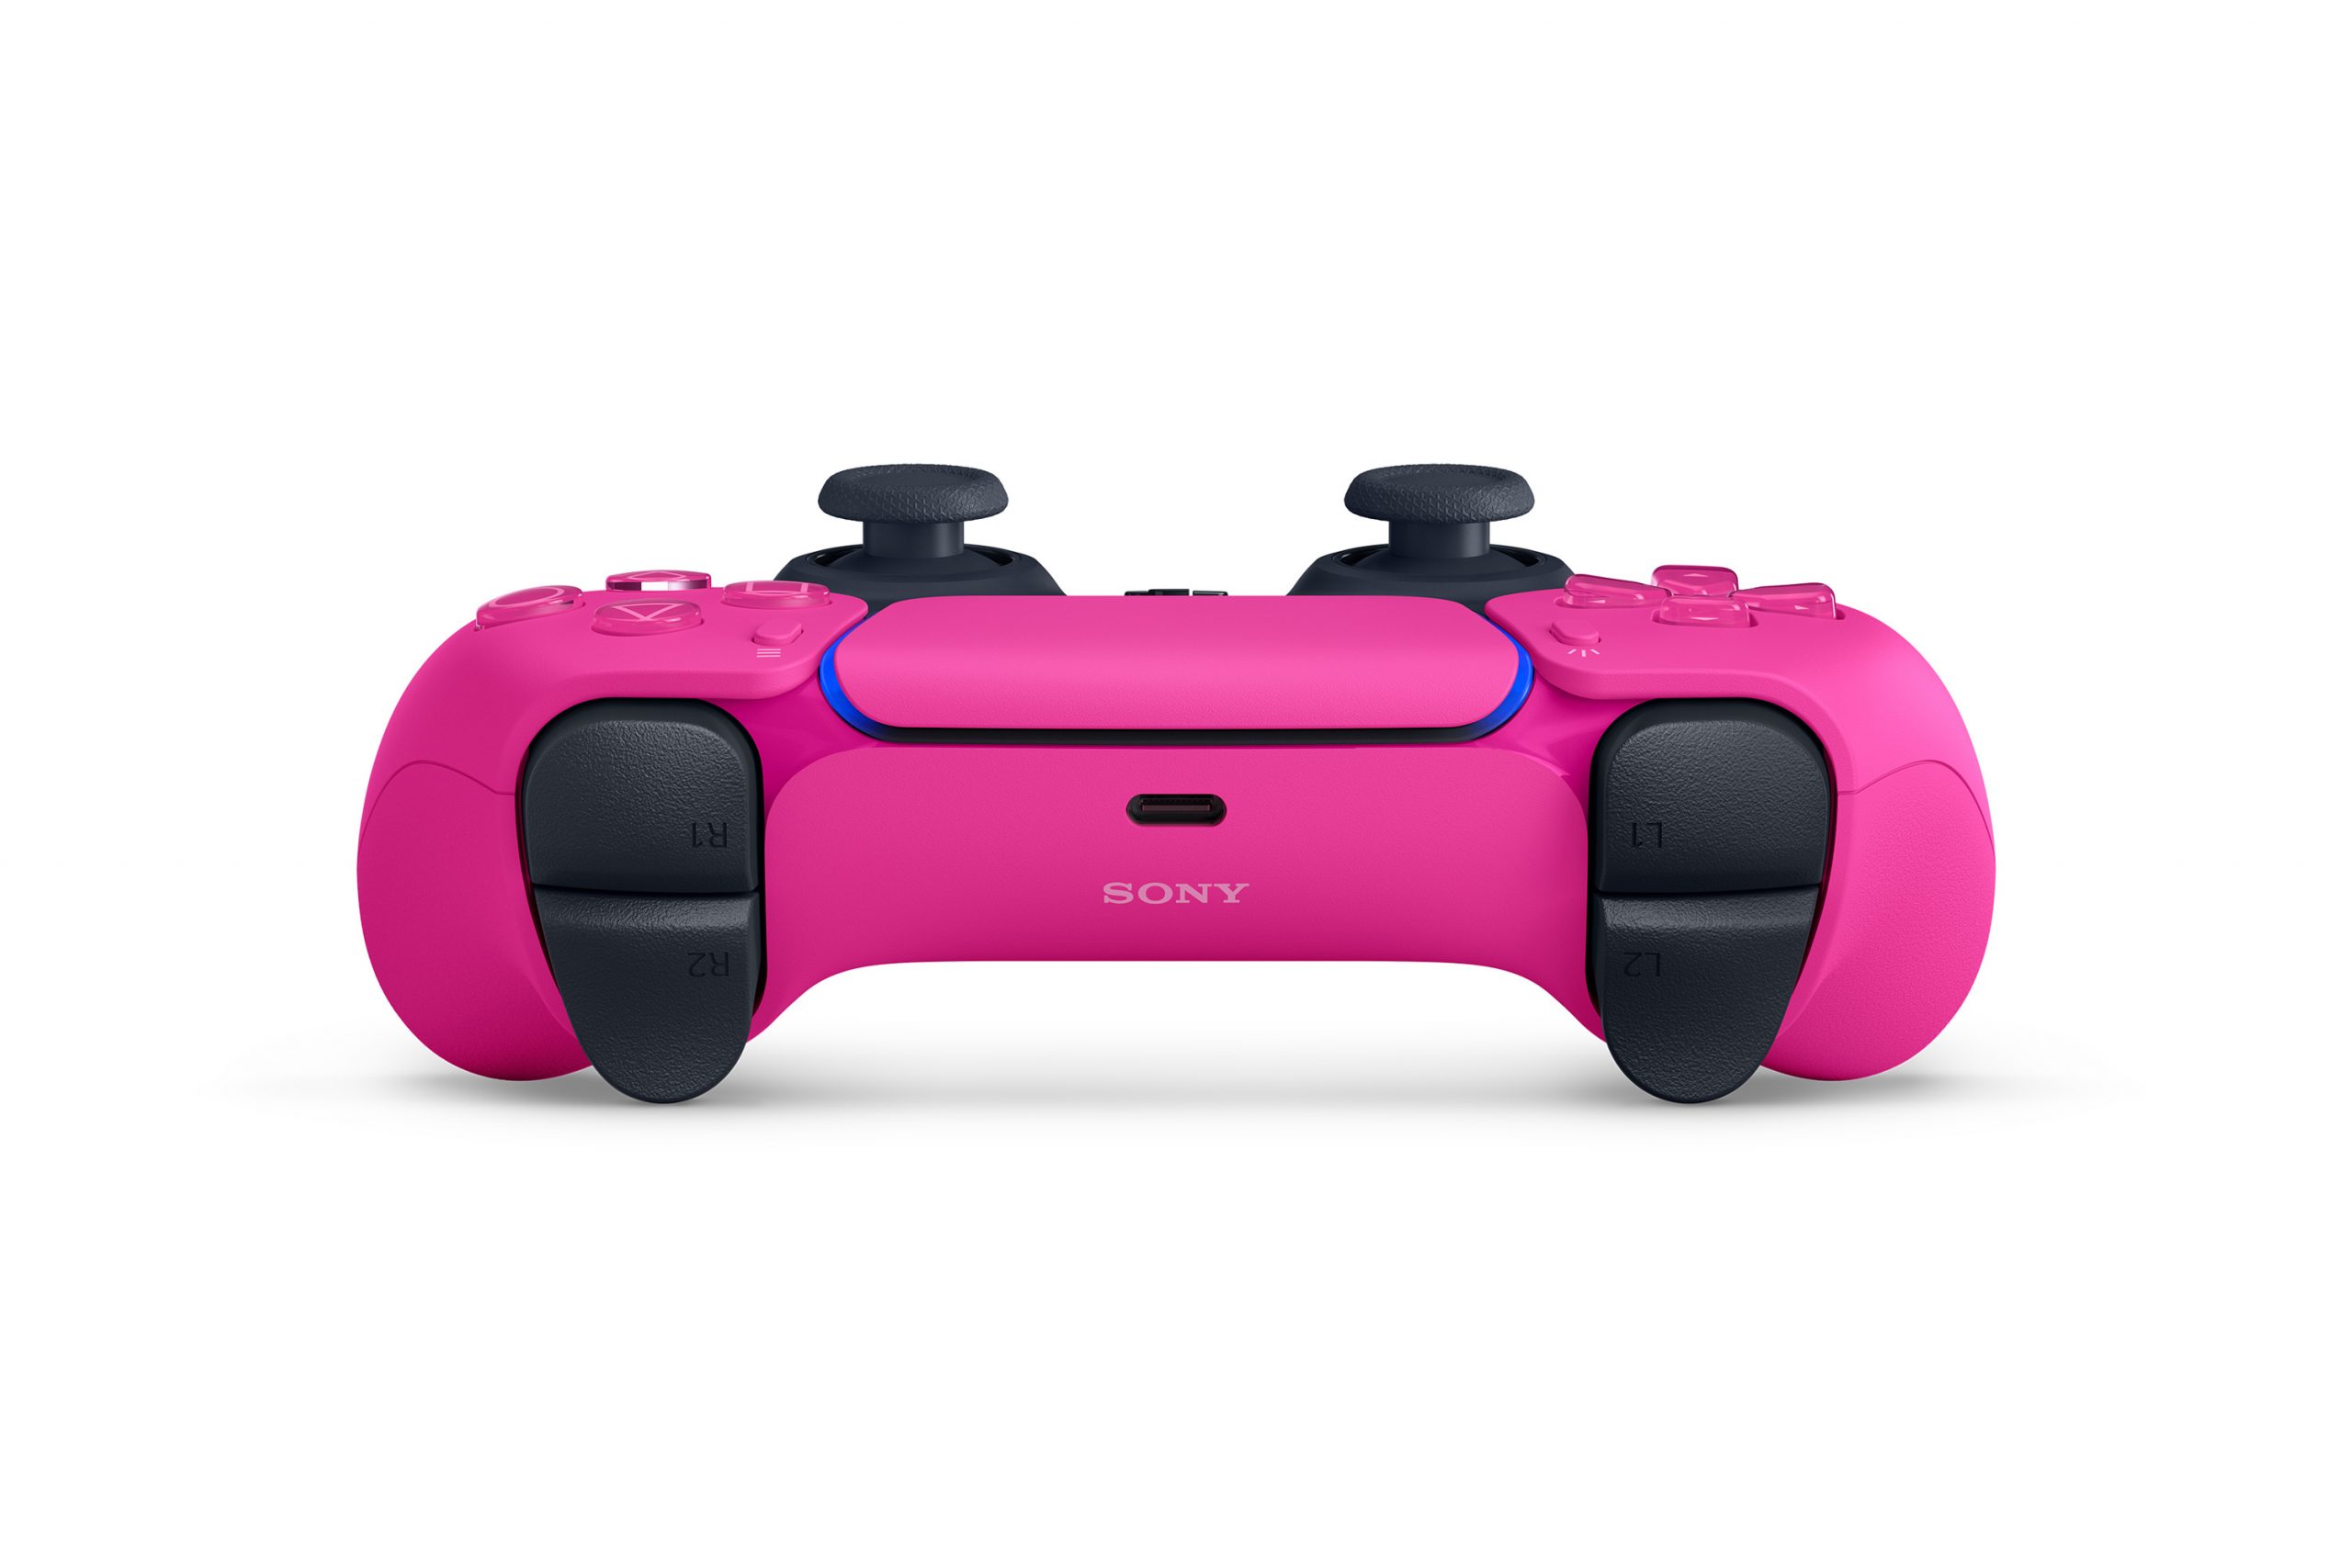 Manette sans-fil DualSense Nova Pink (rose) PS5 à 54,20€